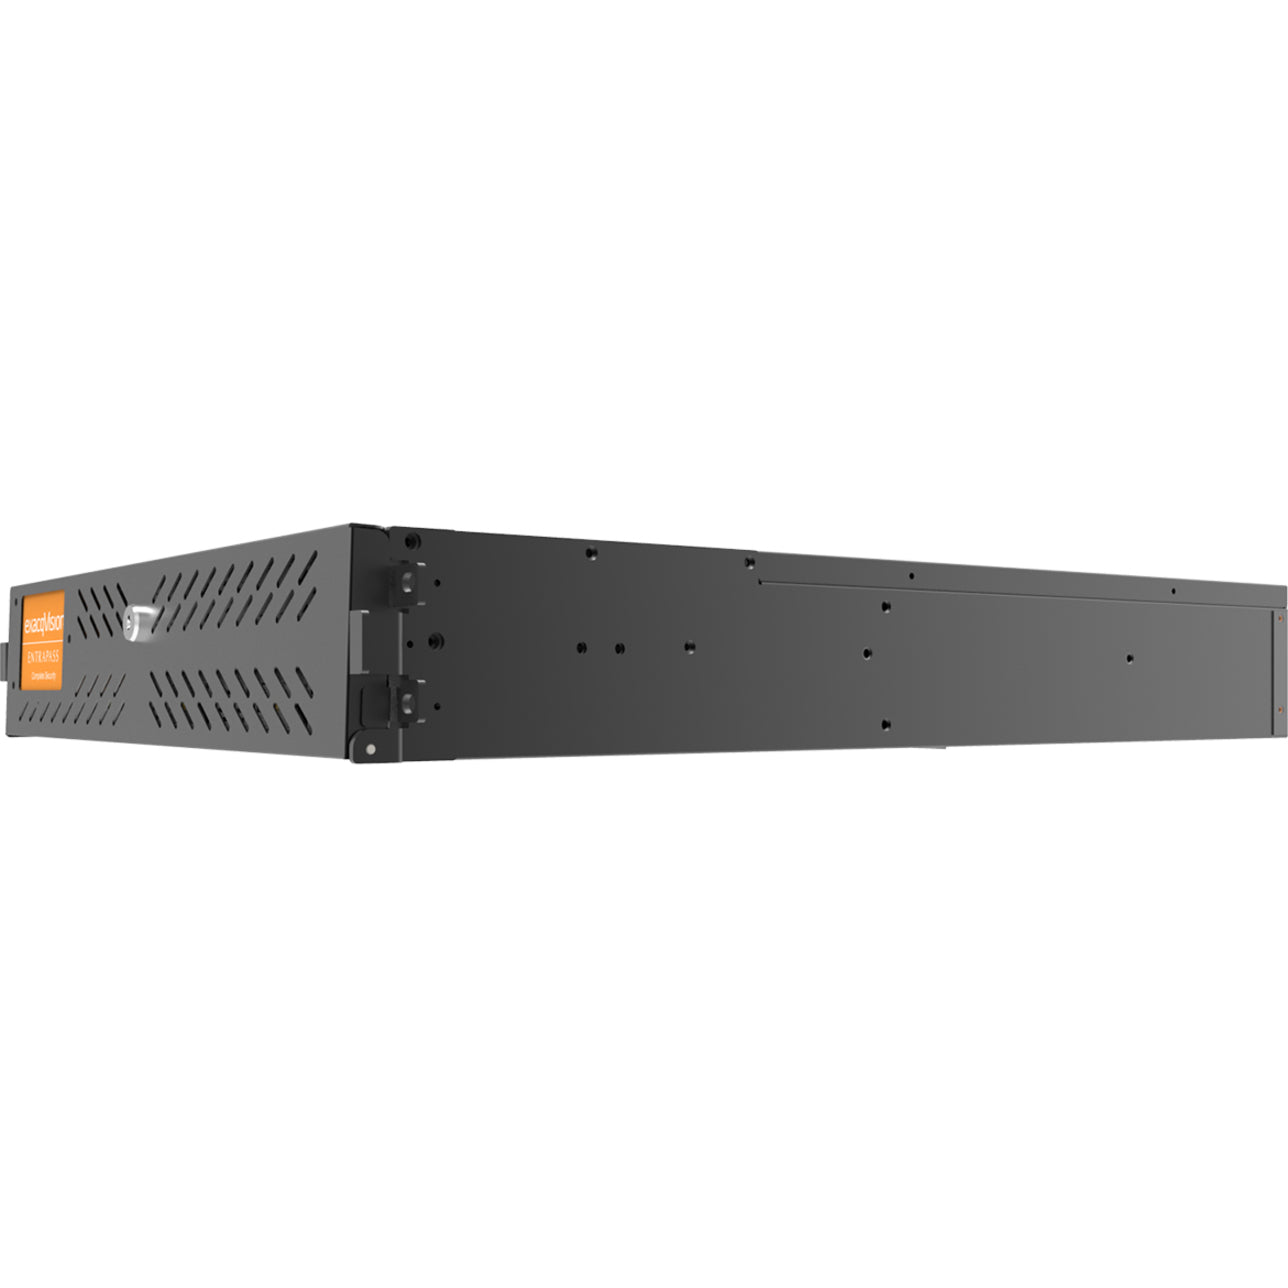 Exacq exacqVision Z Network Surveillance Server - 70 TB HDD